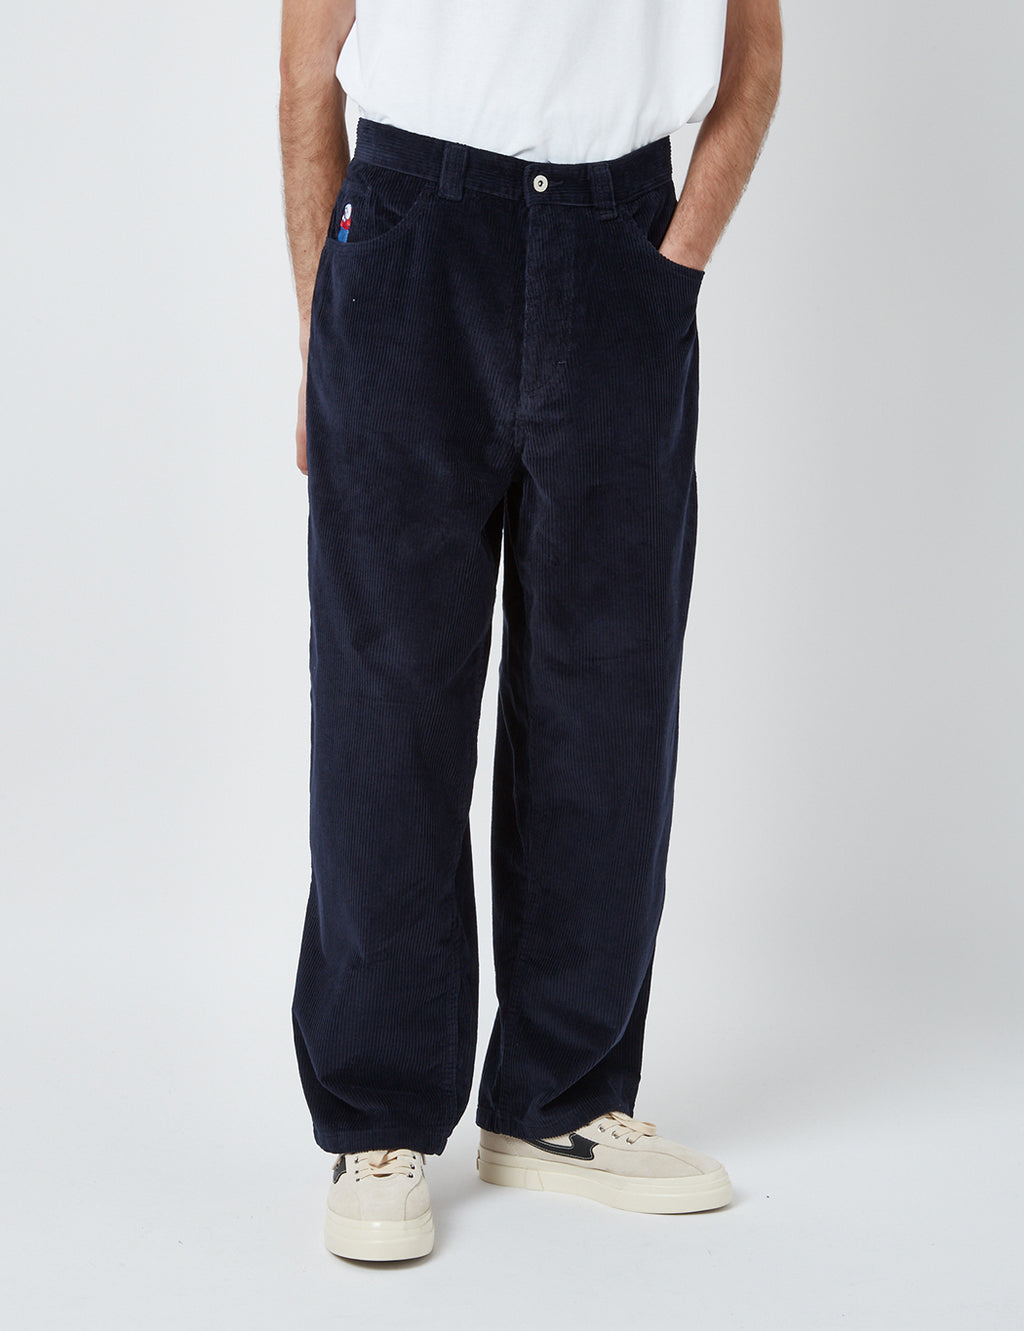 Polar Skate Co. Big Boy Trousers (Cord) - Navy Blue